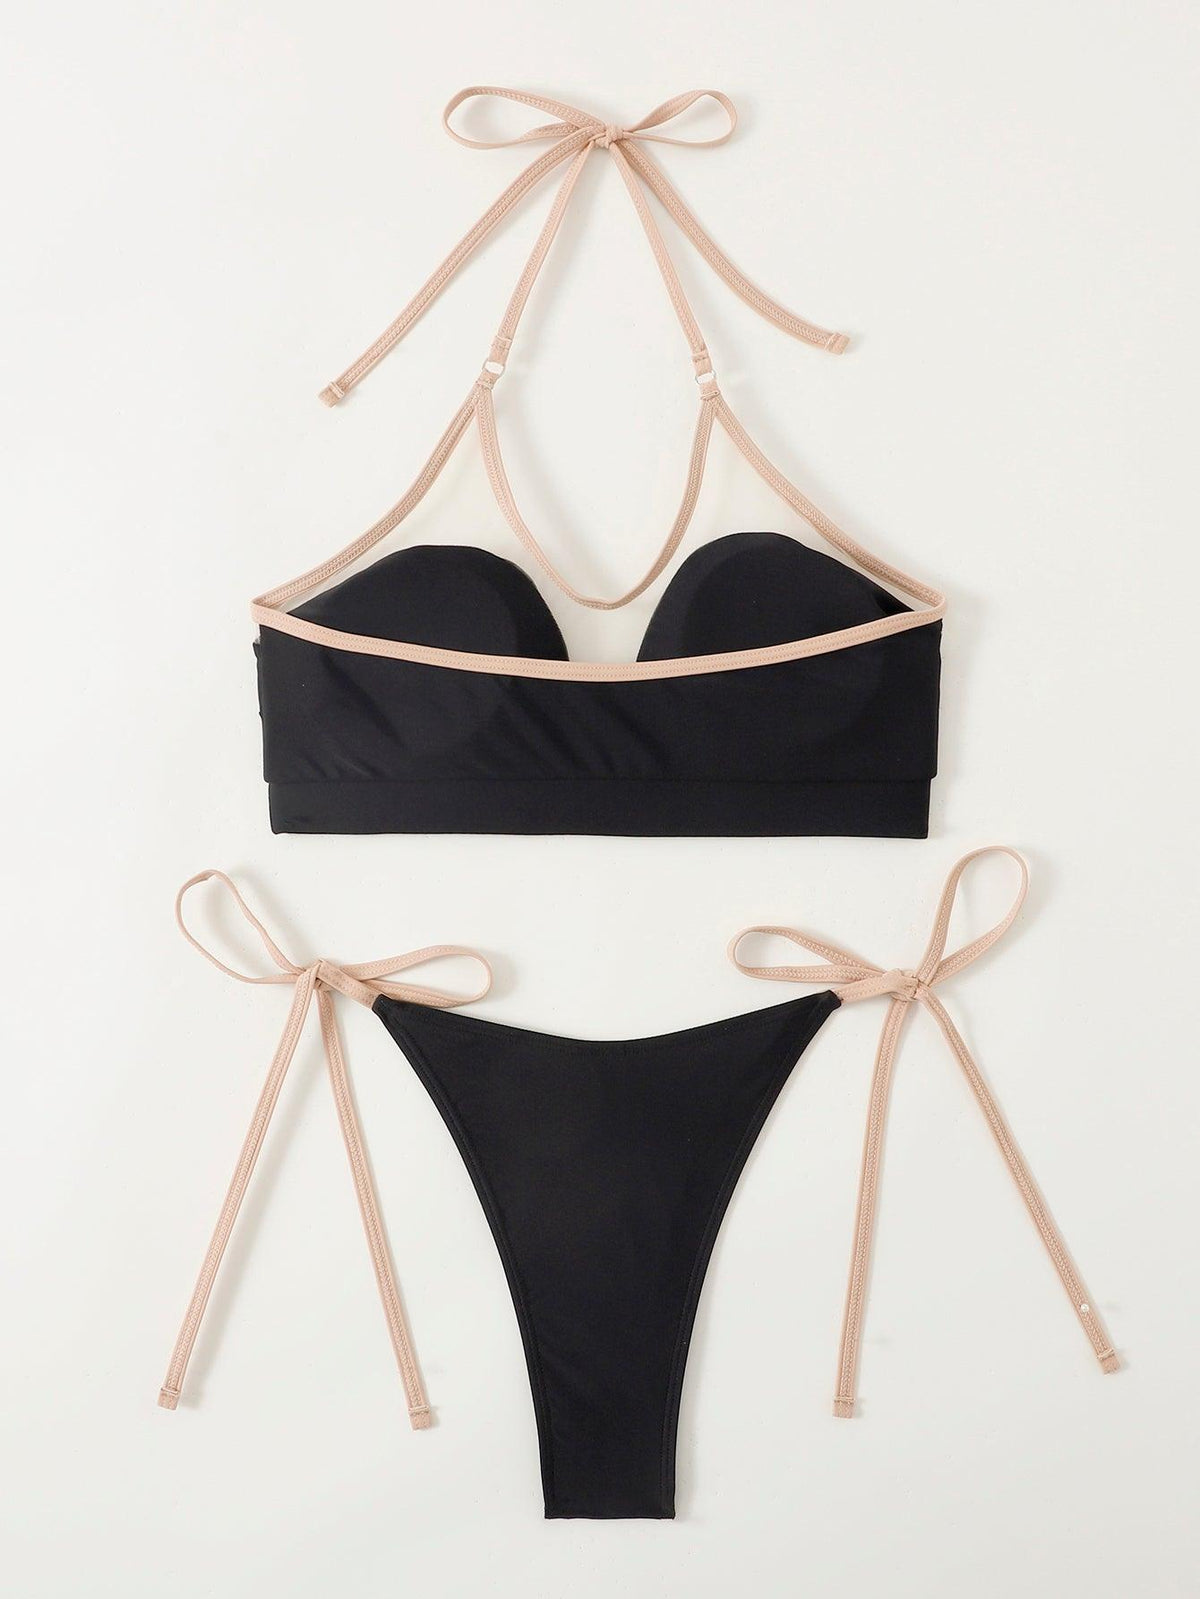 Women's Lace Bikini Set - Sexy Swimwear for Beach & Pool - GFIT SPORTS